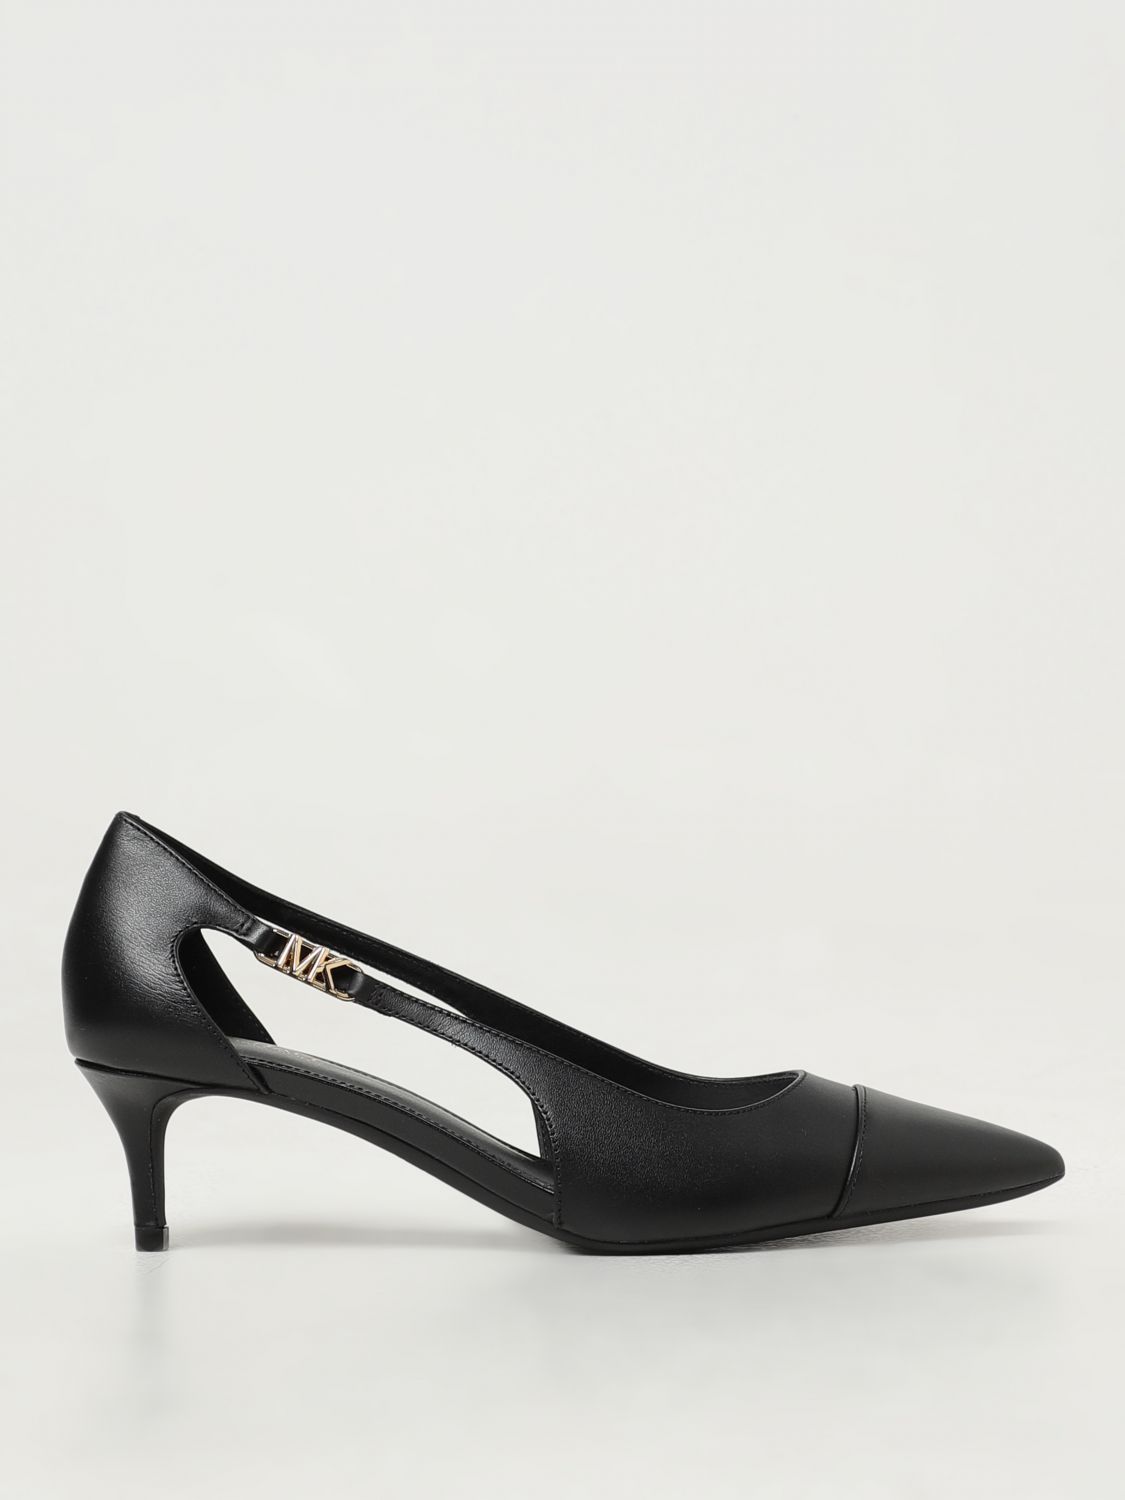 Michael Kors High Heel Shoes MICHAEL KORS Woman color Black